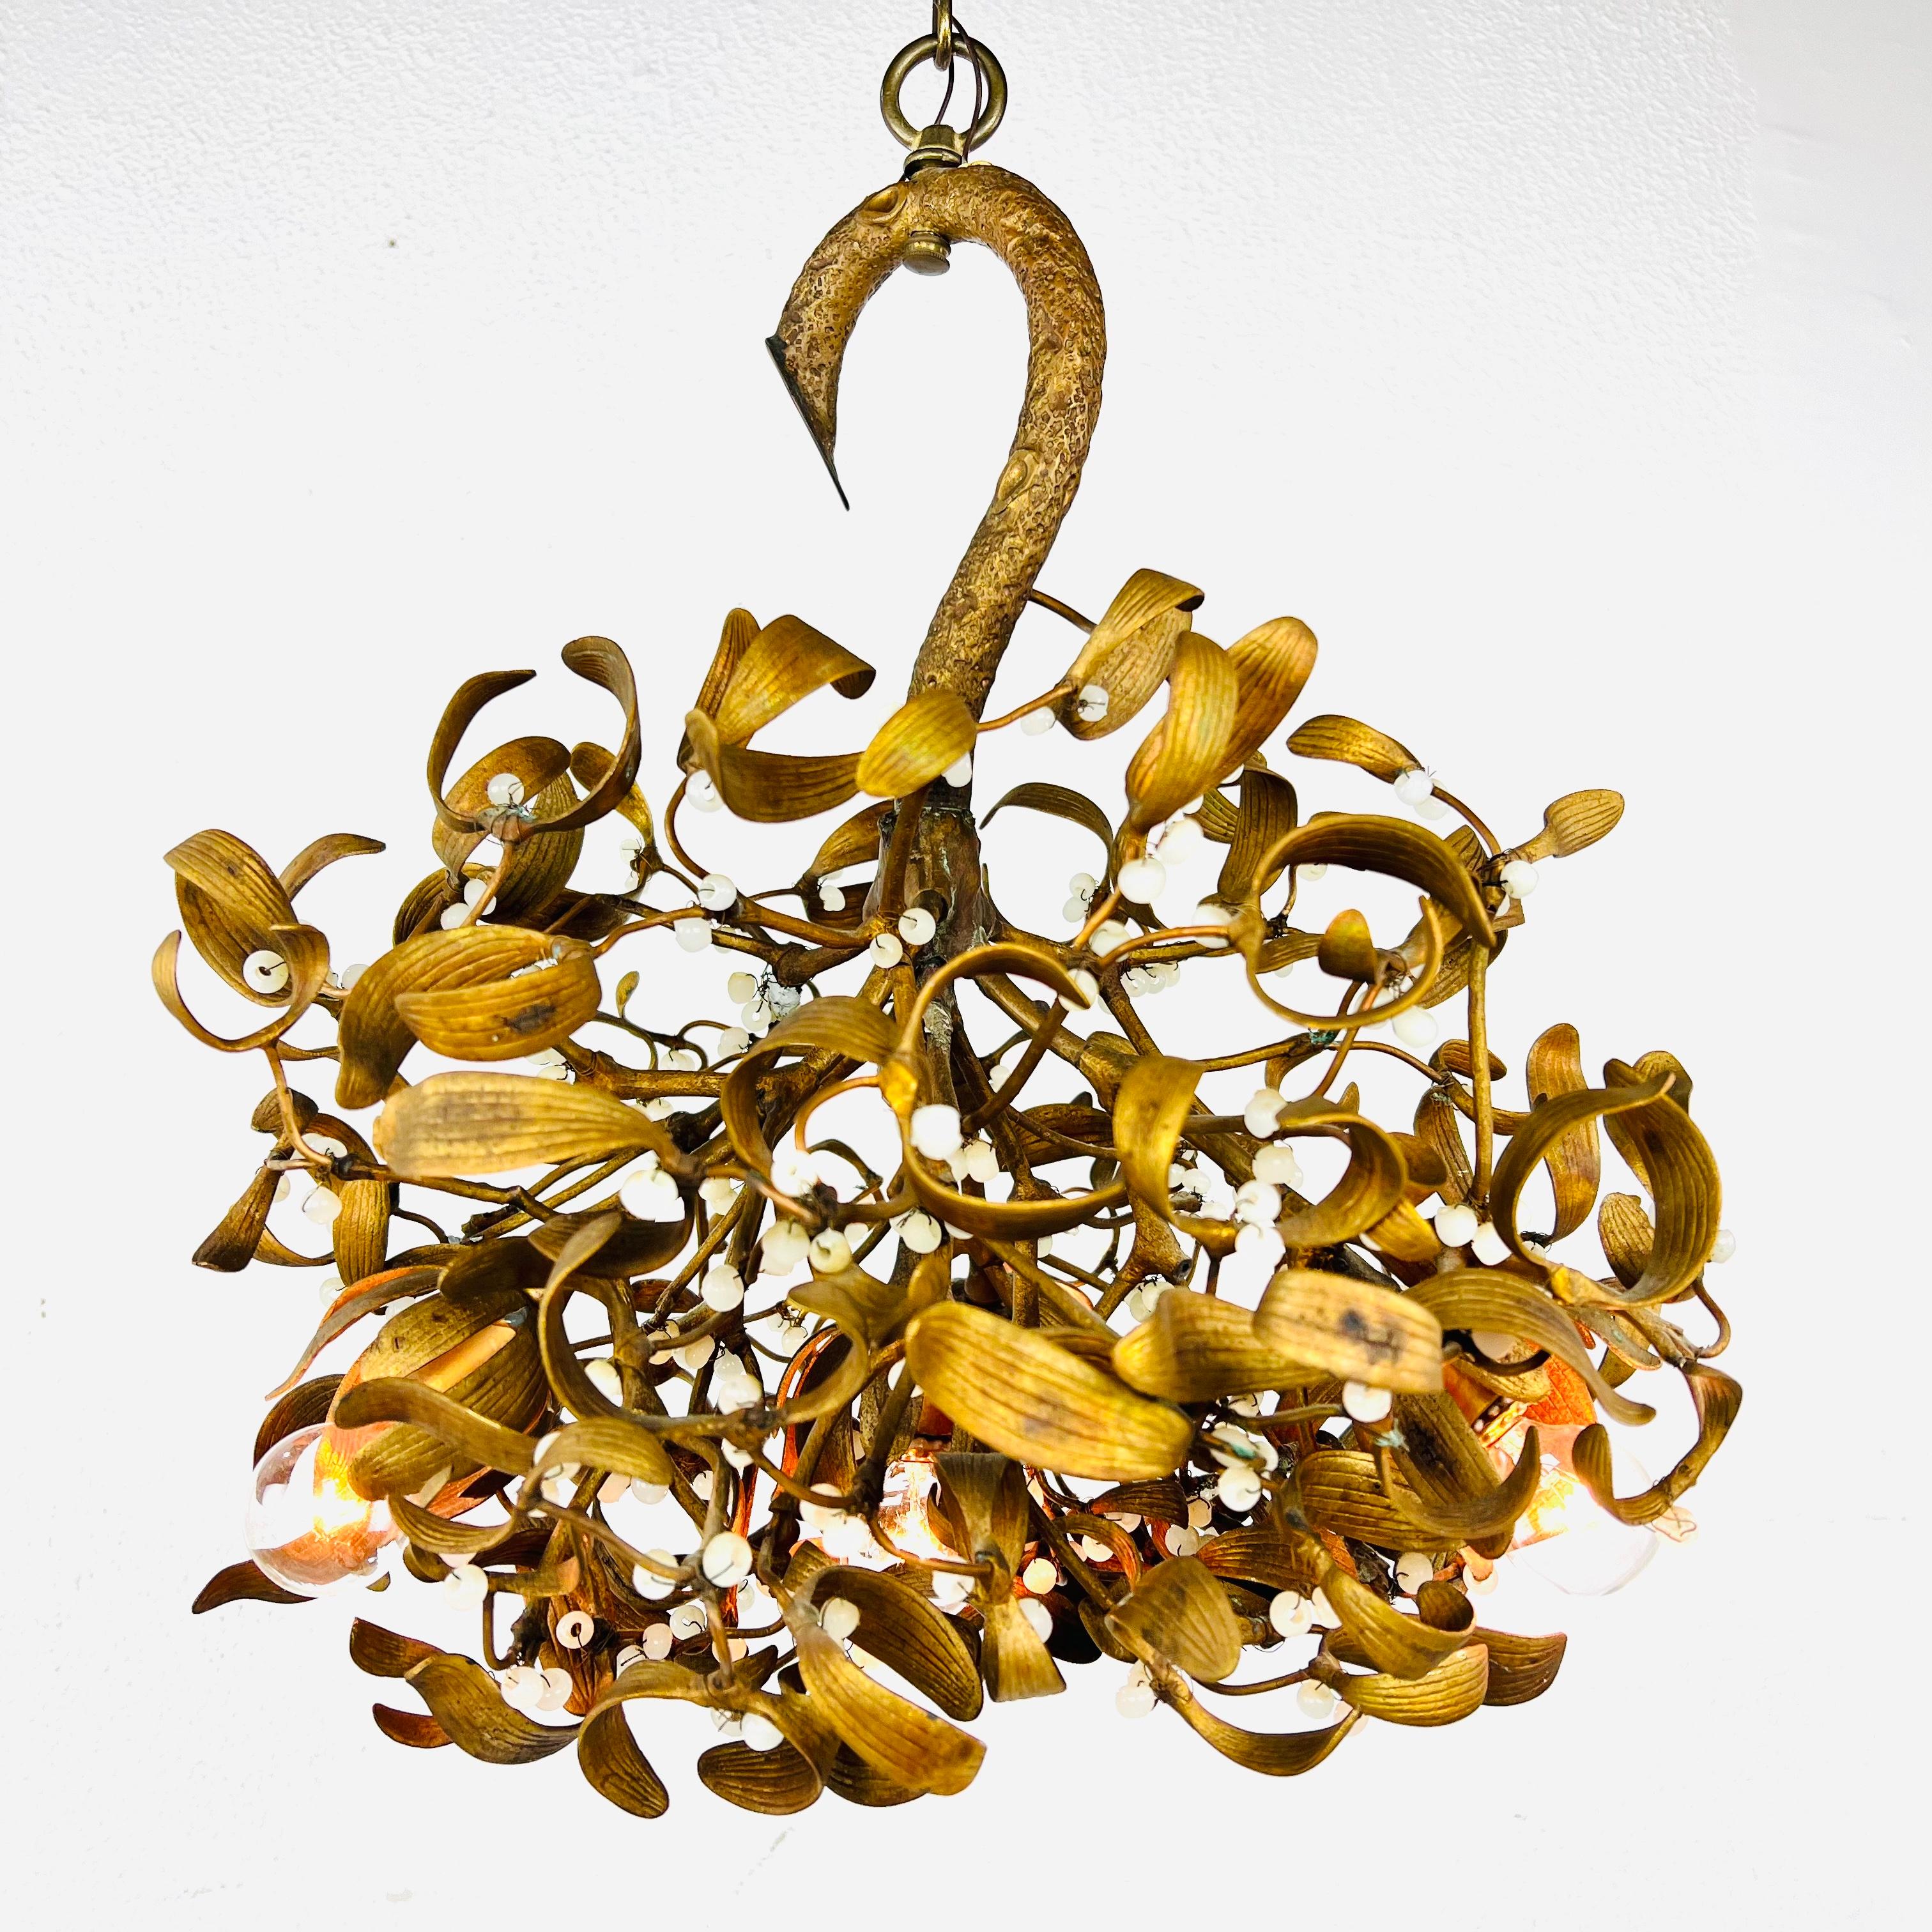 Sculptural early 1900s art nouveau antique bronze mistletoe chandelier. Berries are made from glass opaline beads. 4 E14 bulbs provide plenty of light. 